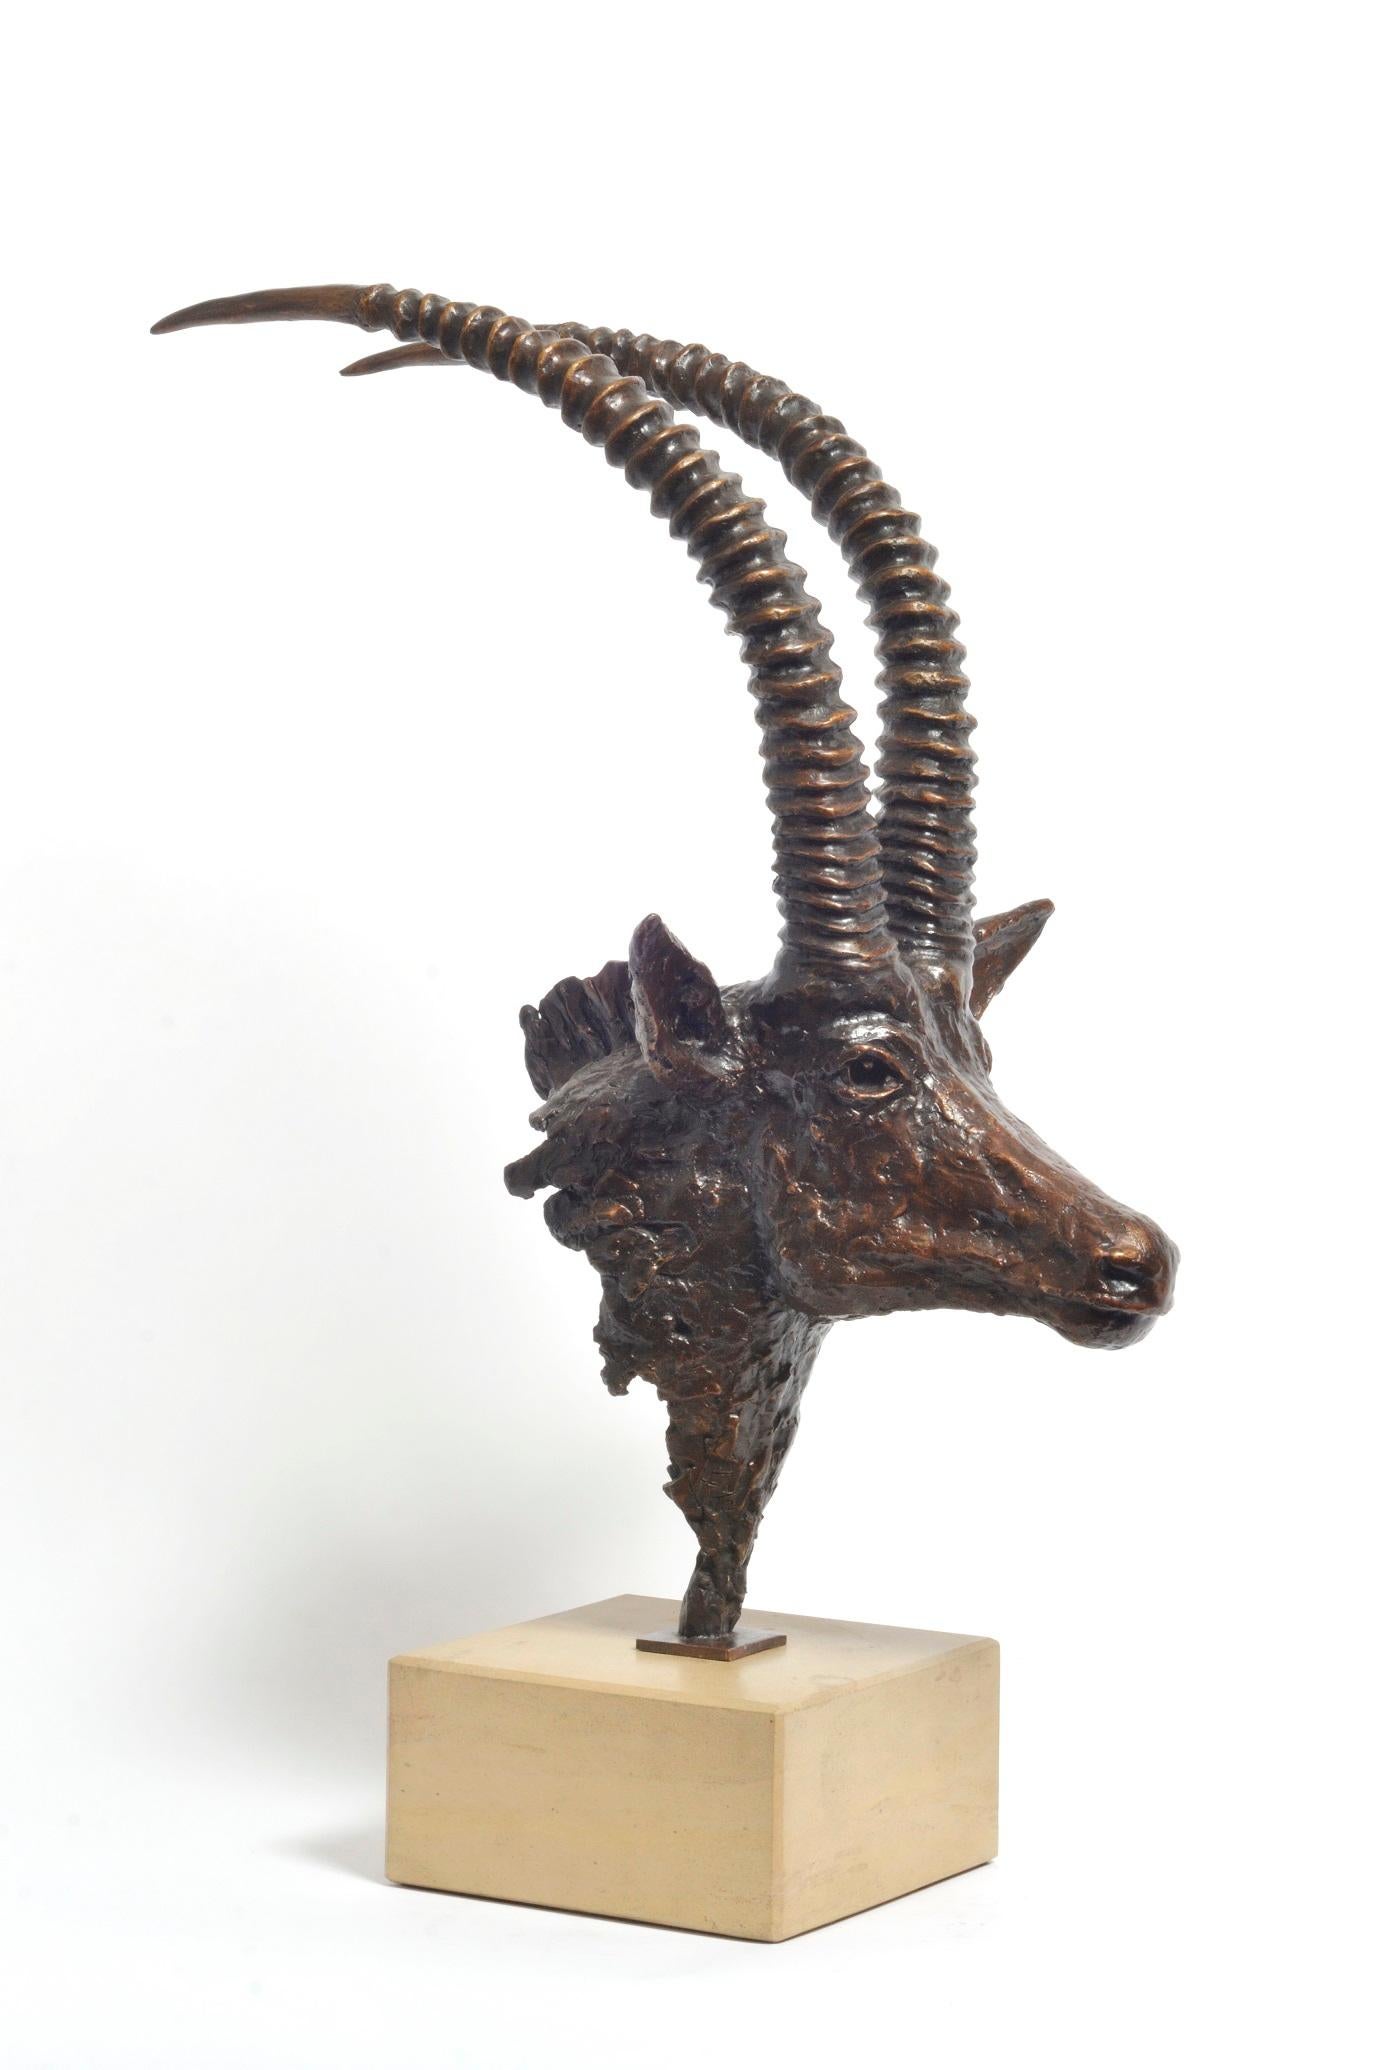 Heinrich Filter Figurative Sculpture - Sable Antelope Bust - African Wildlife Sculpture - Limited Bronze Edition